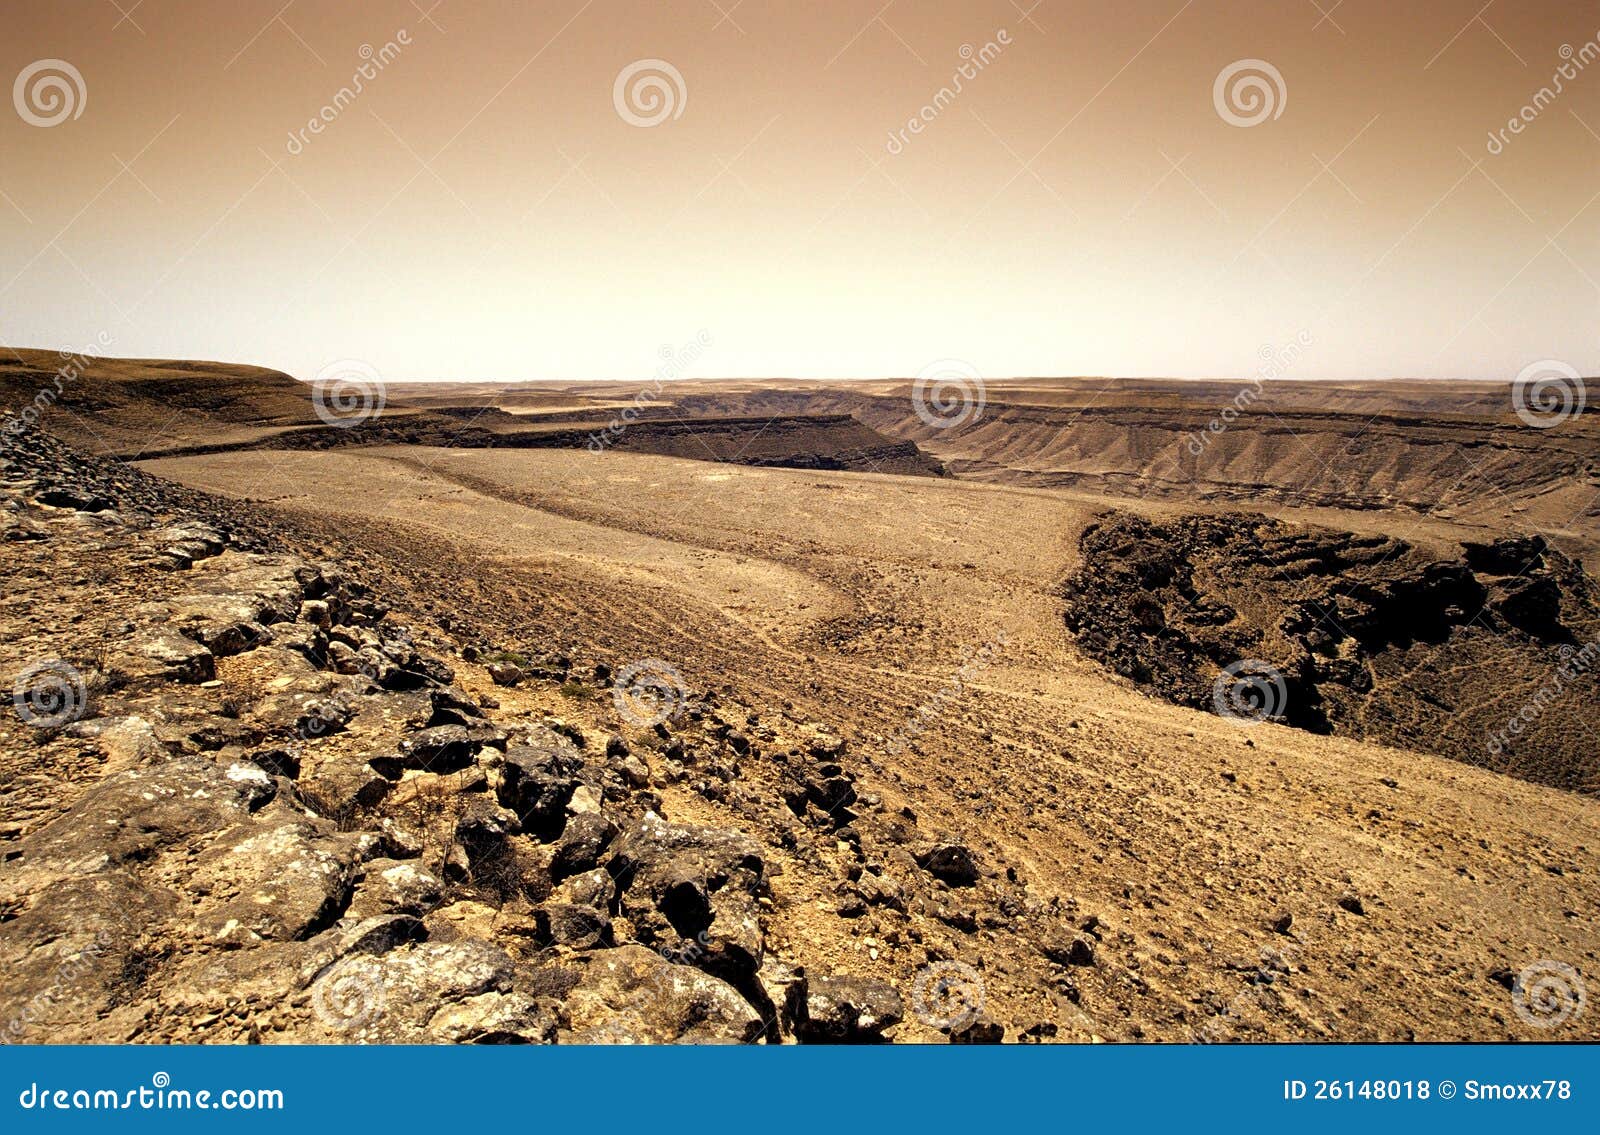 Rocky desert landscape stock photo. Image of nature, oman - 26148018